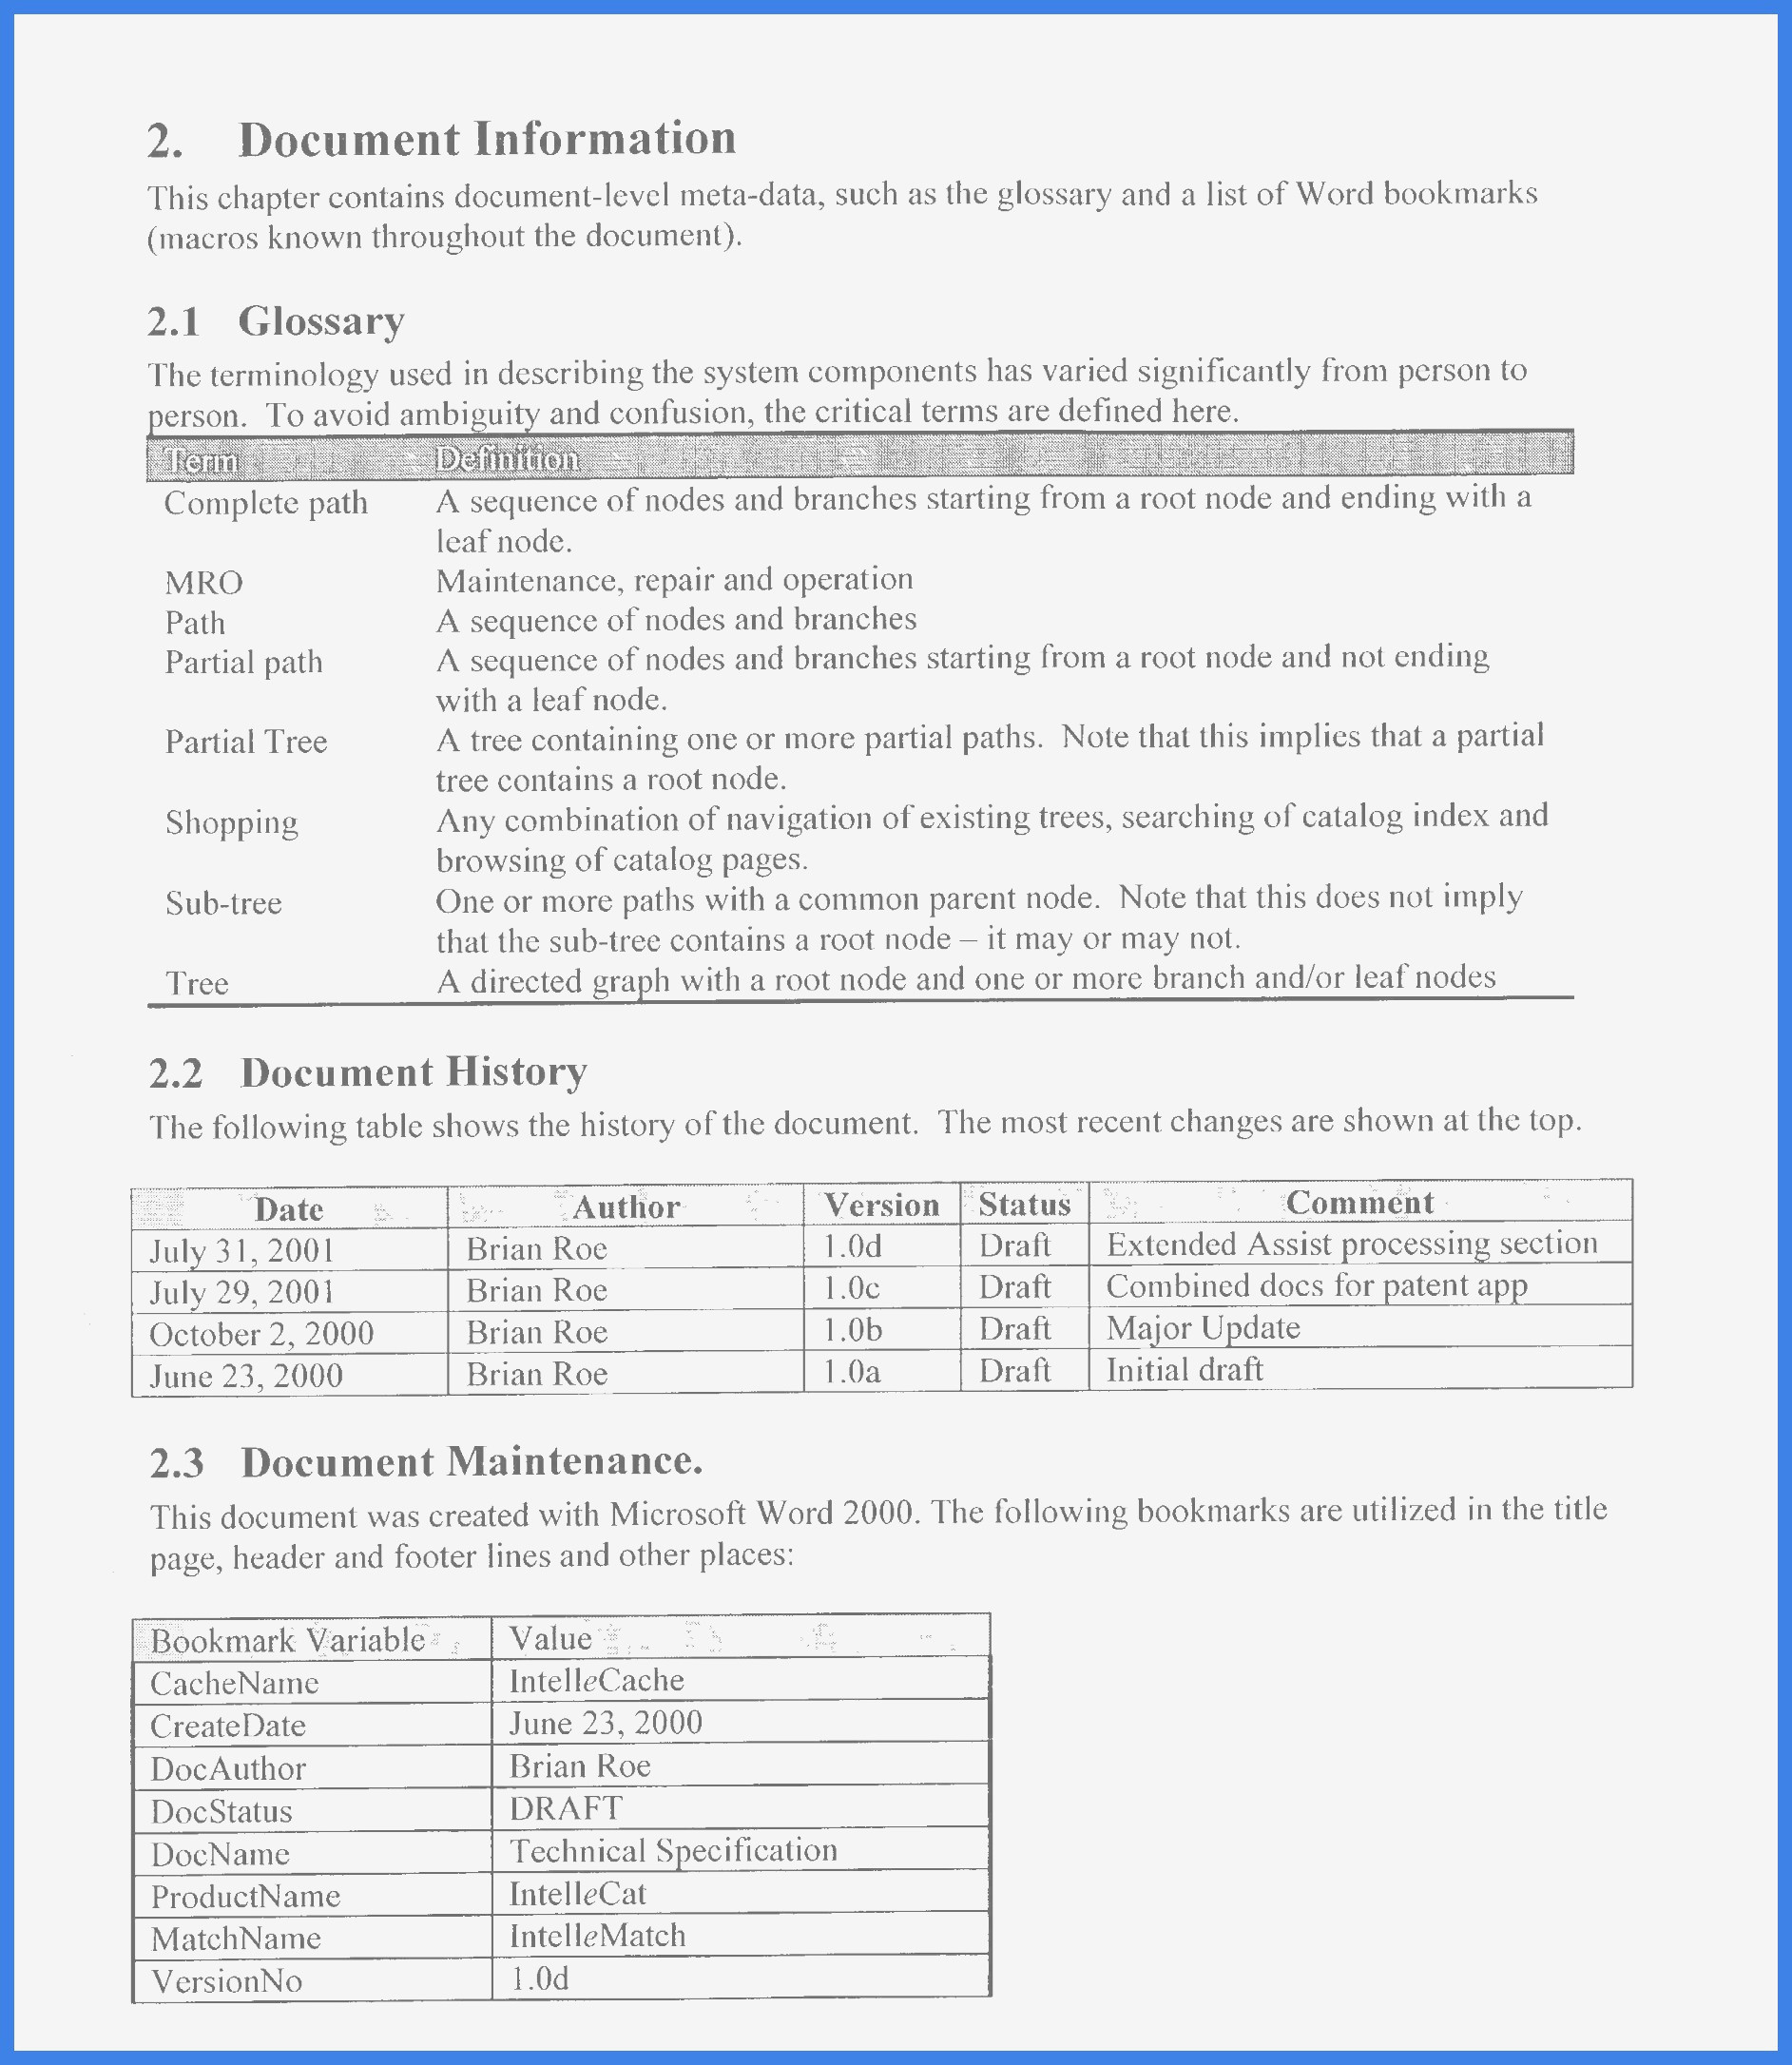 Resume Templates Microsoft Word Modern Resume Template 2016 Free Creative Resume Templates Word Best Template Ms Save Fresh Pr Resume Of Modern Resume Template 2016 resume templates microsoft word|wikiresume.com